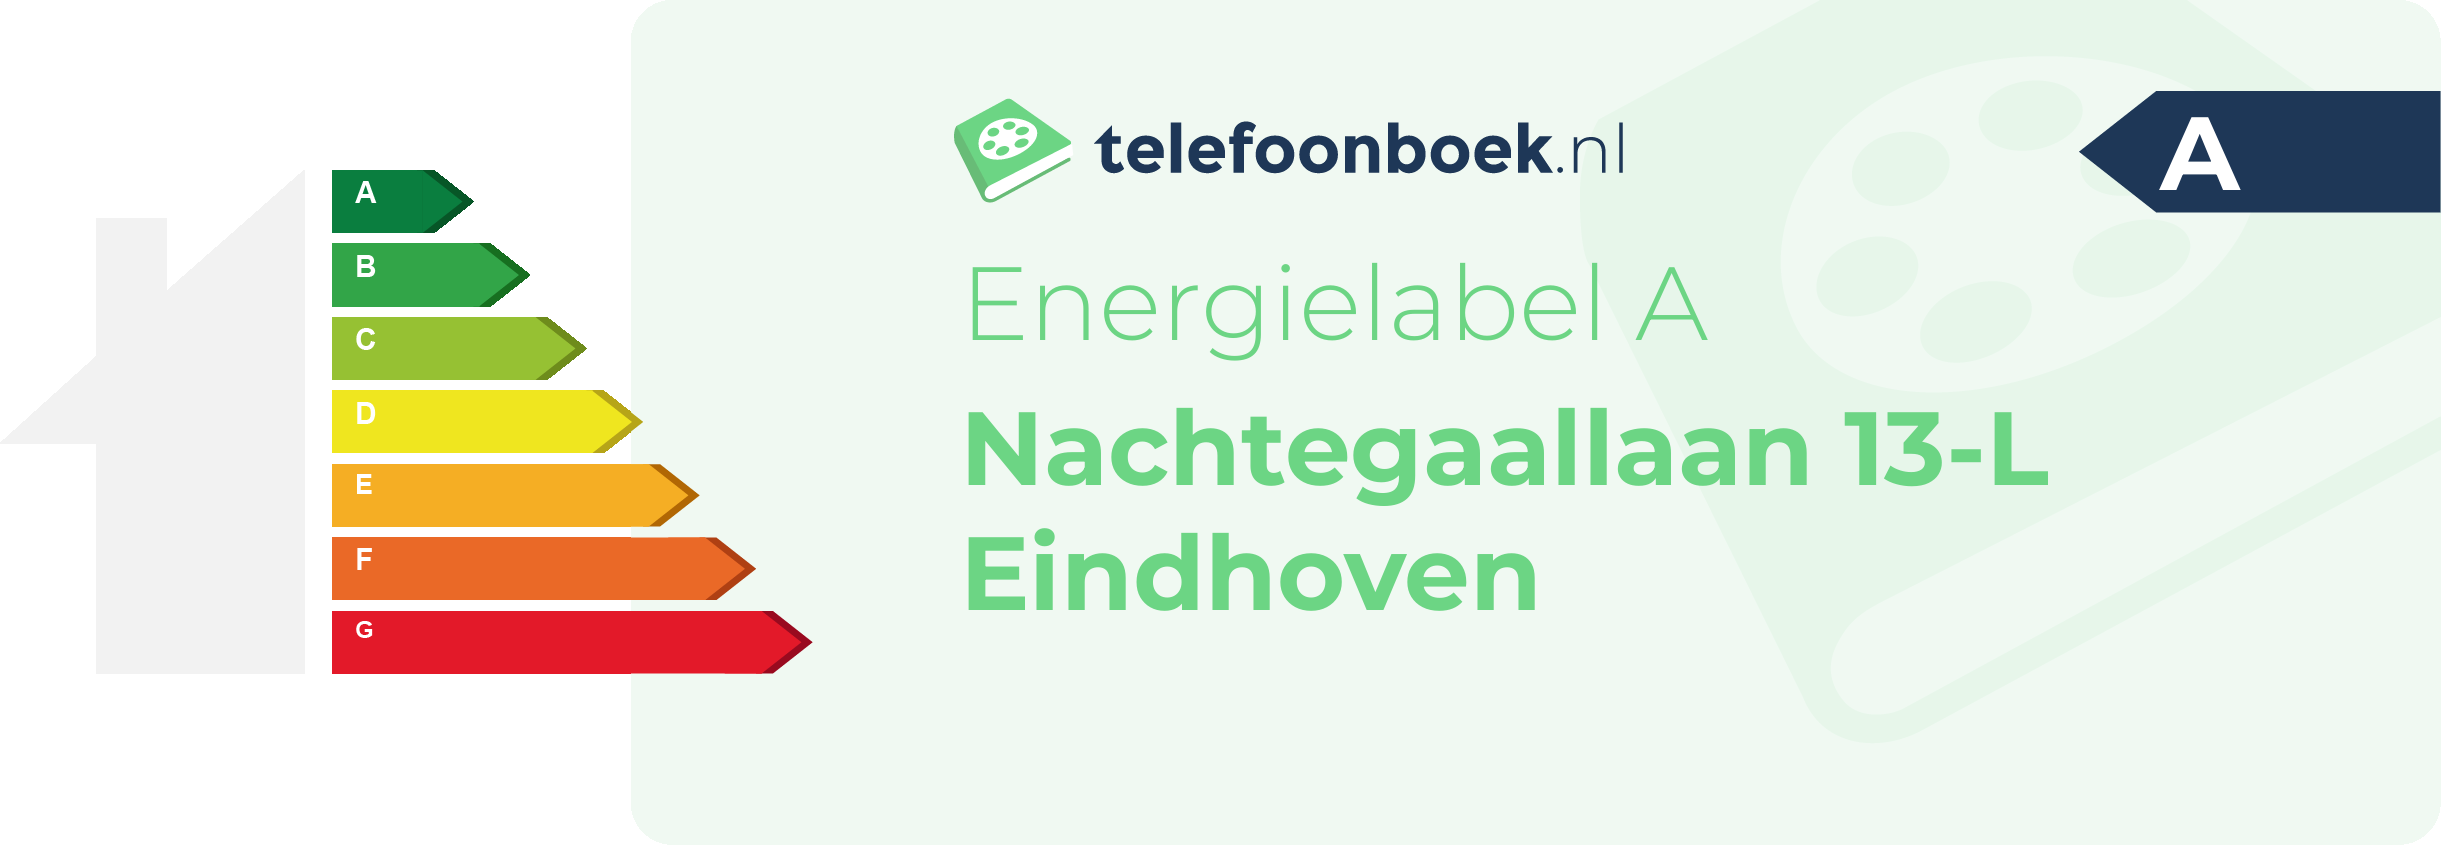 Energielabel Nachtegaallaan 13-L Eindhoven